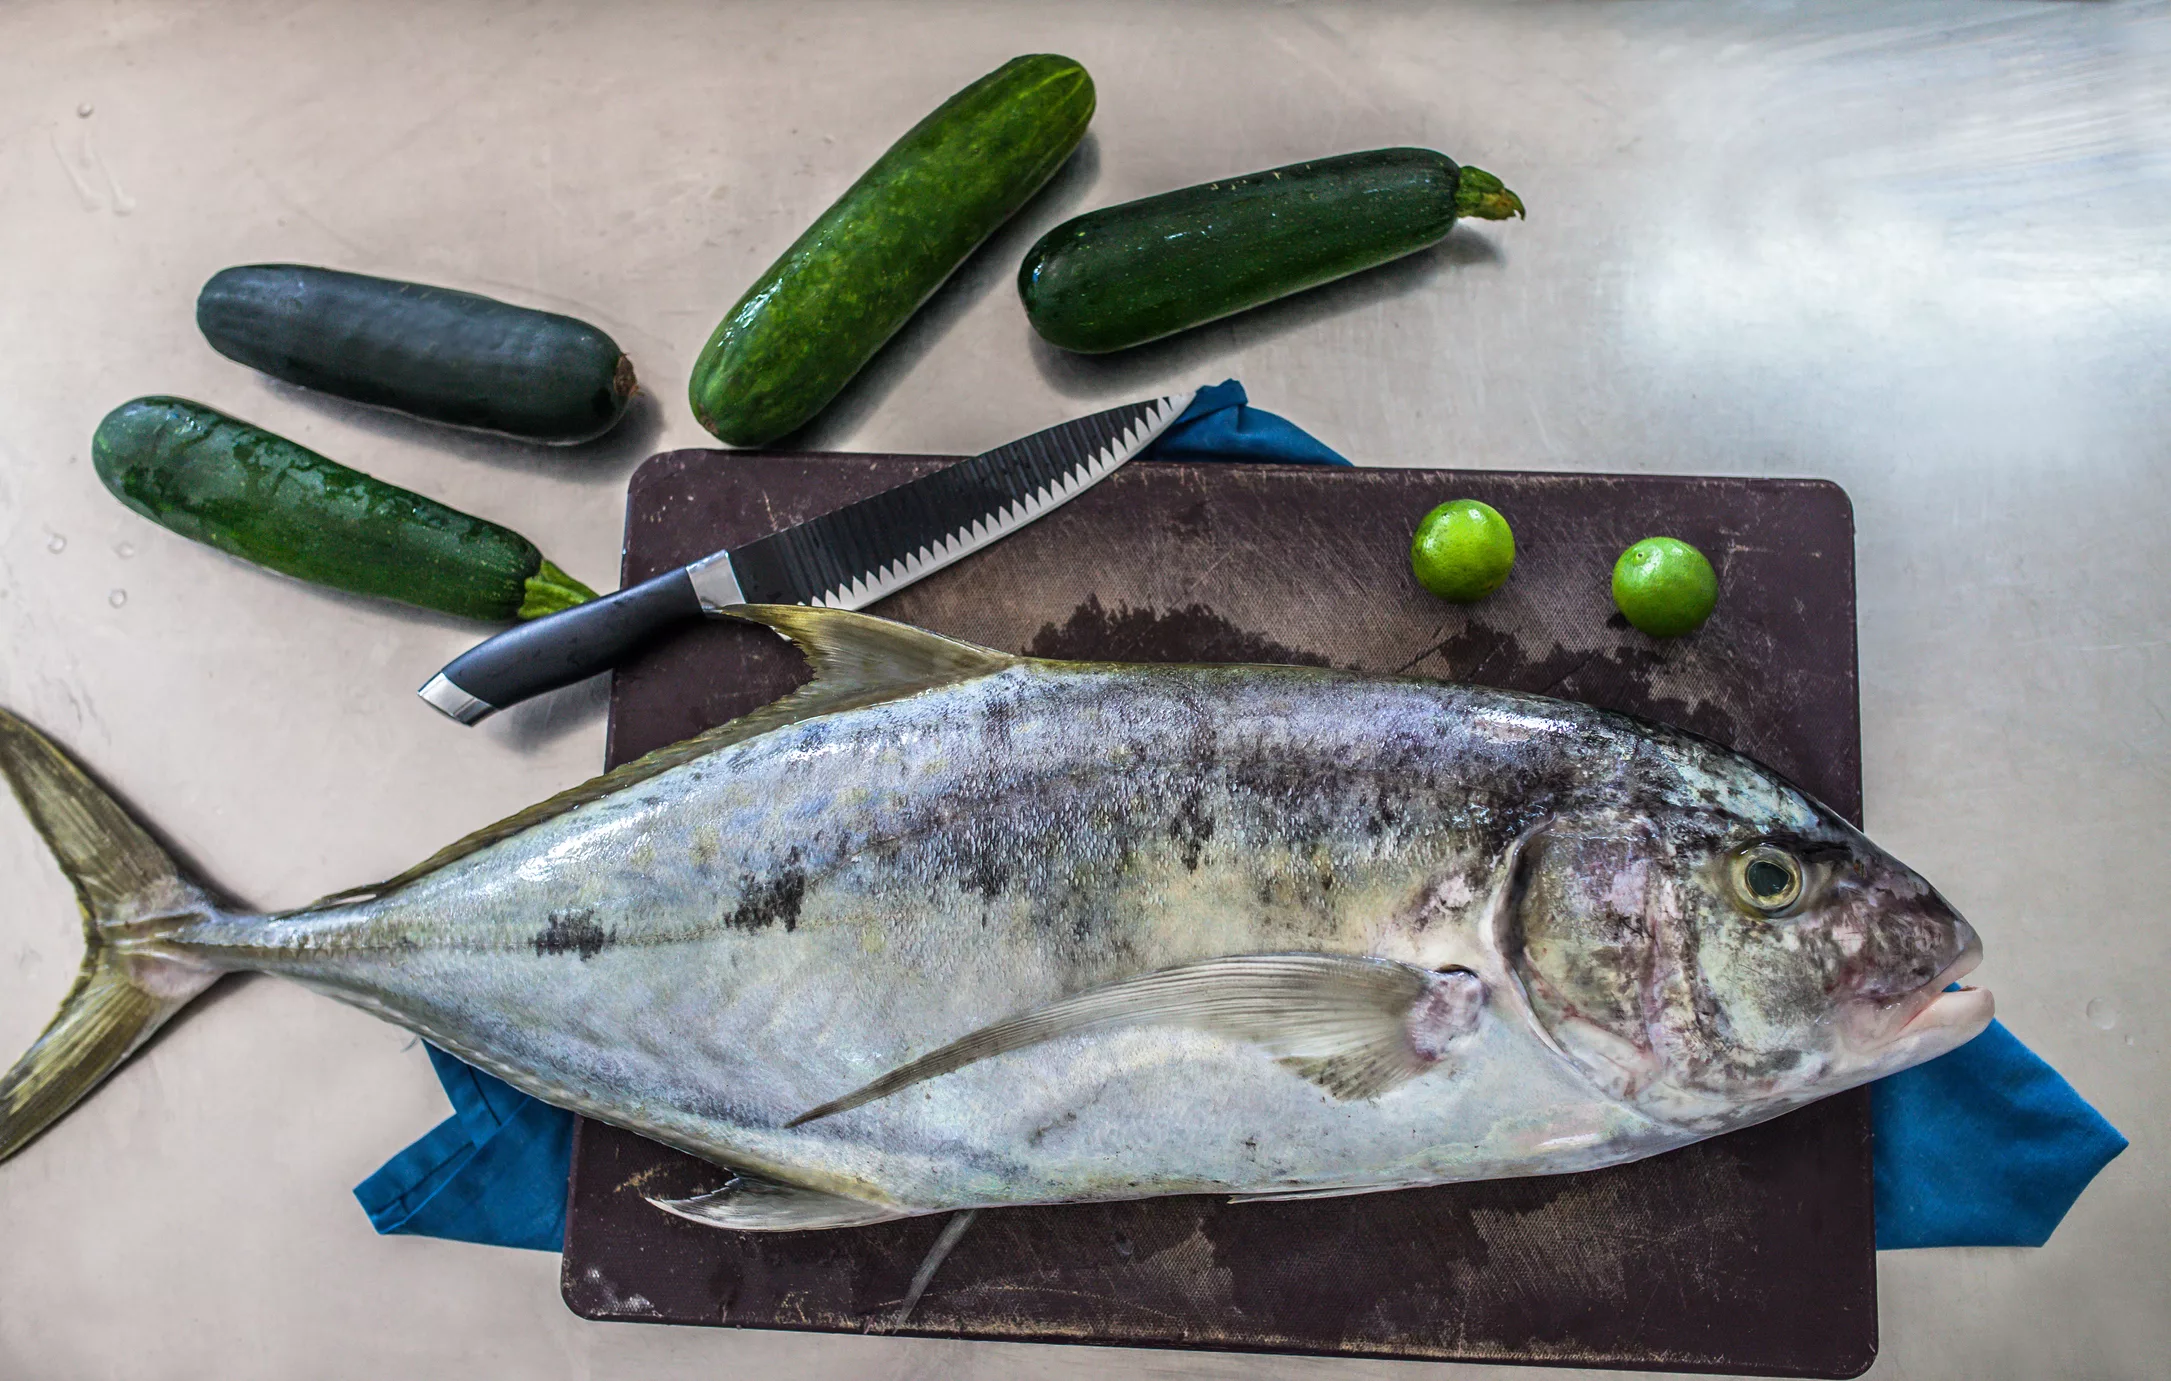 chef-preparing-fish-or-seafood-meal